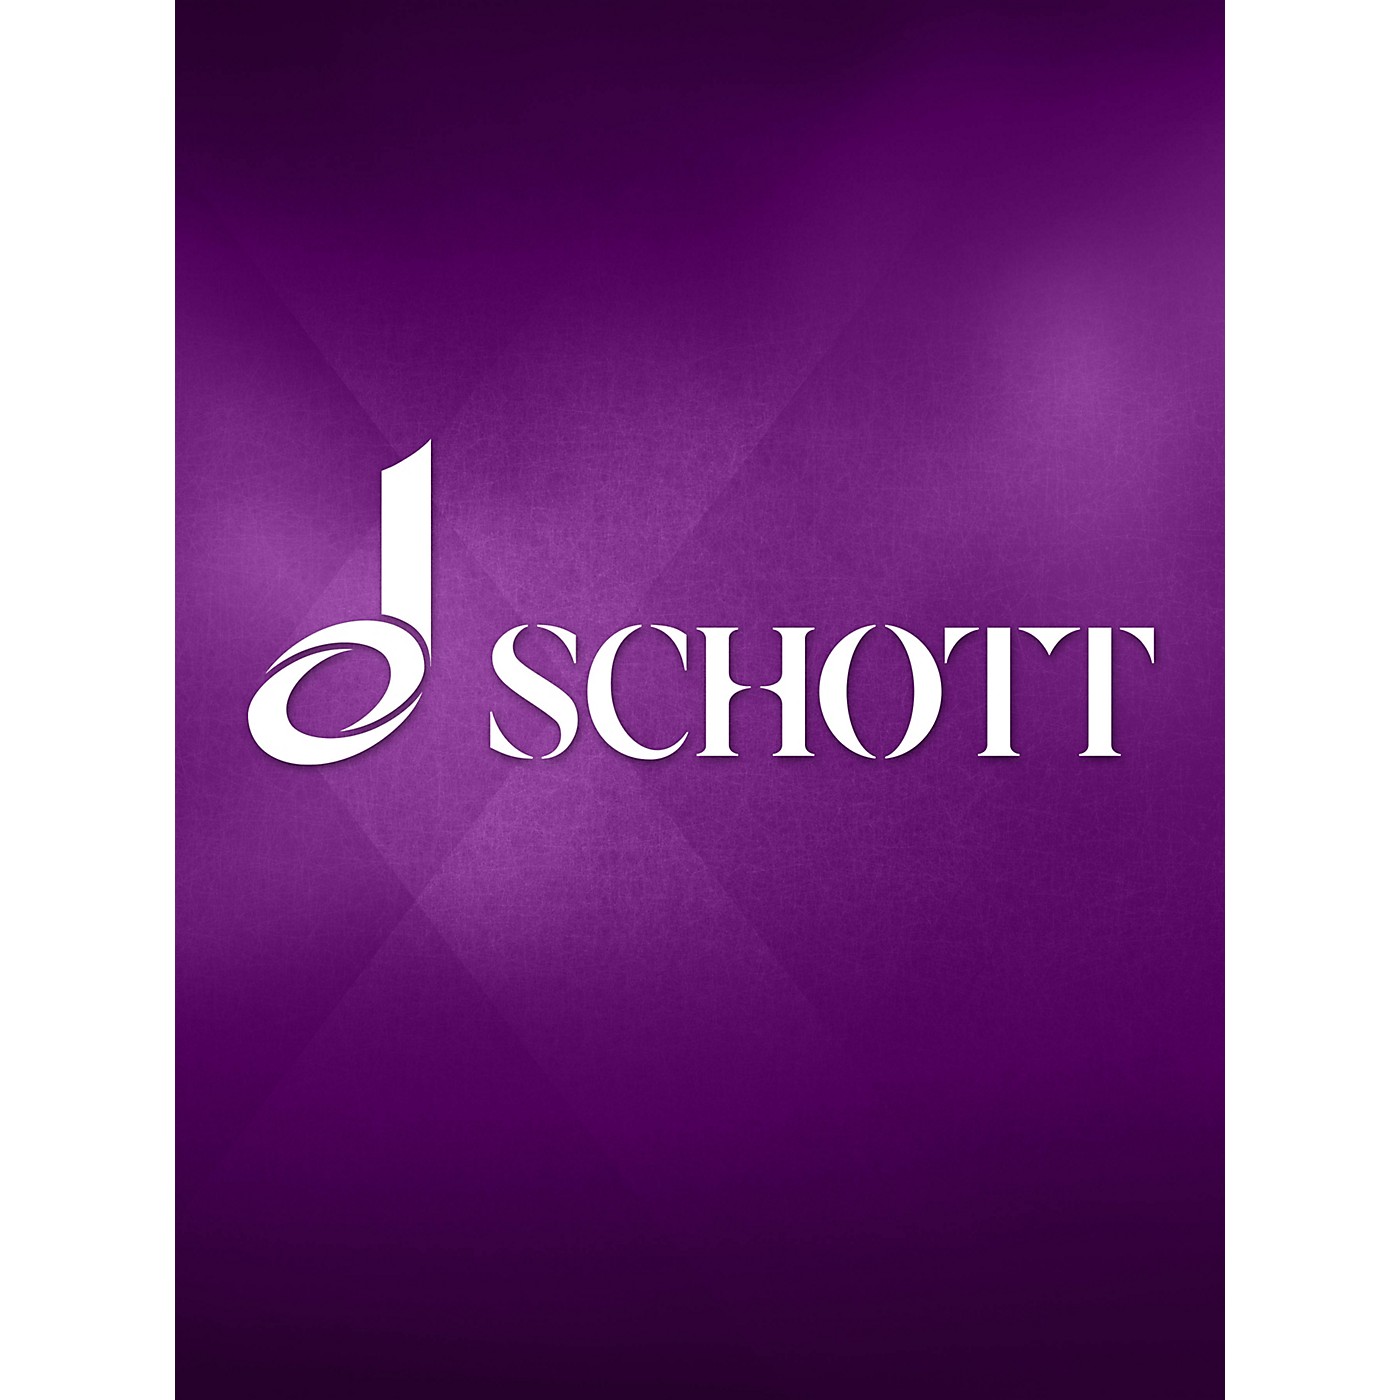 Hal Leonard Beethoven Notebook Blue (3-pack) Retail $7.99 Each Schott Series thumbnail